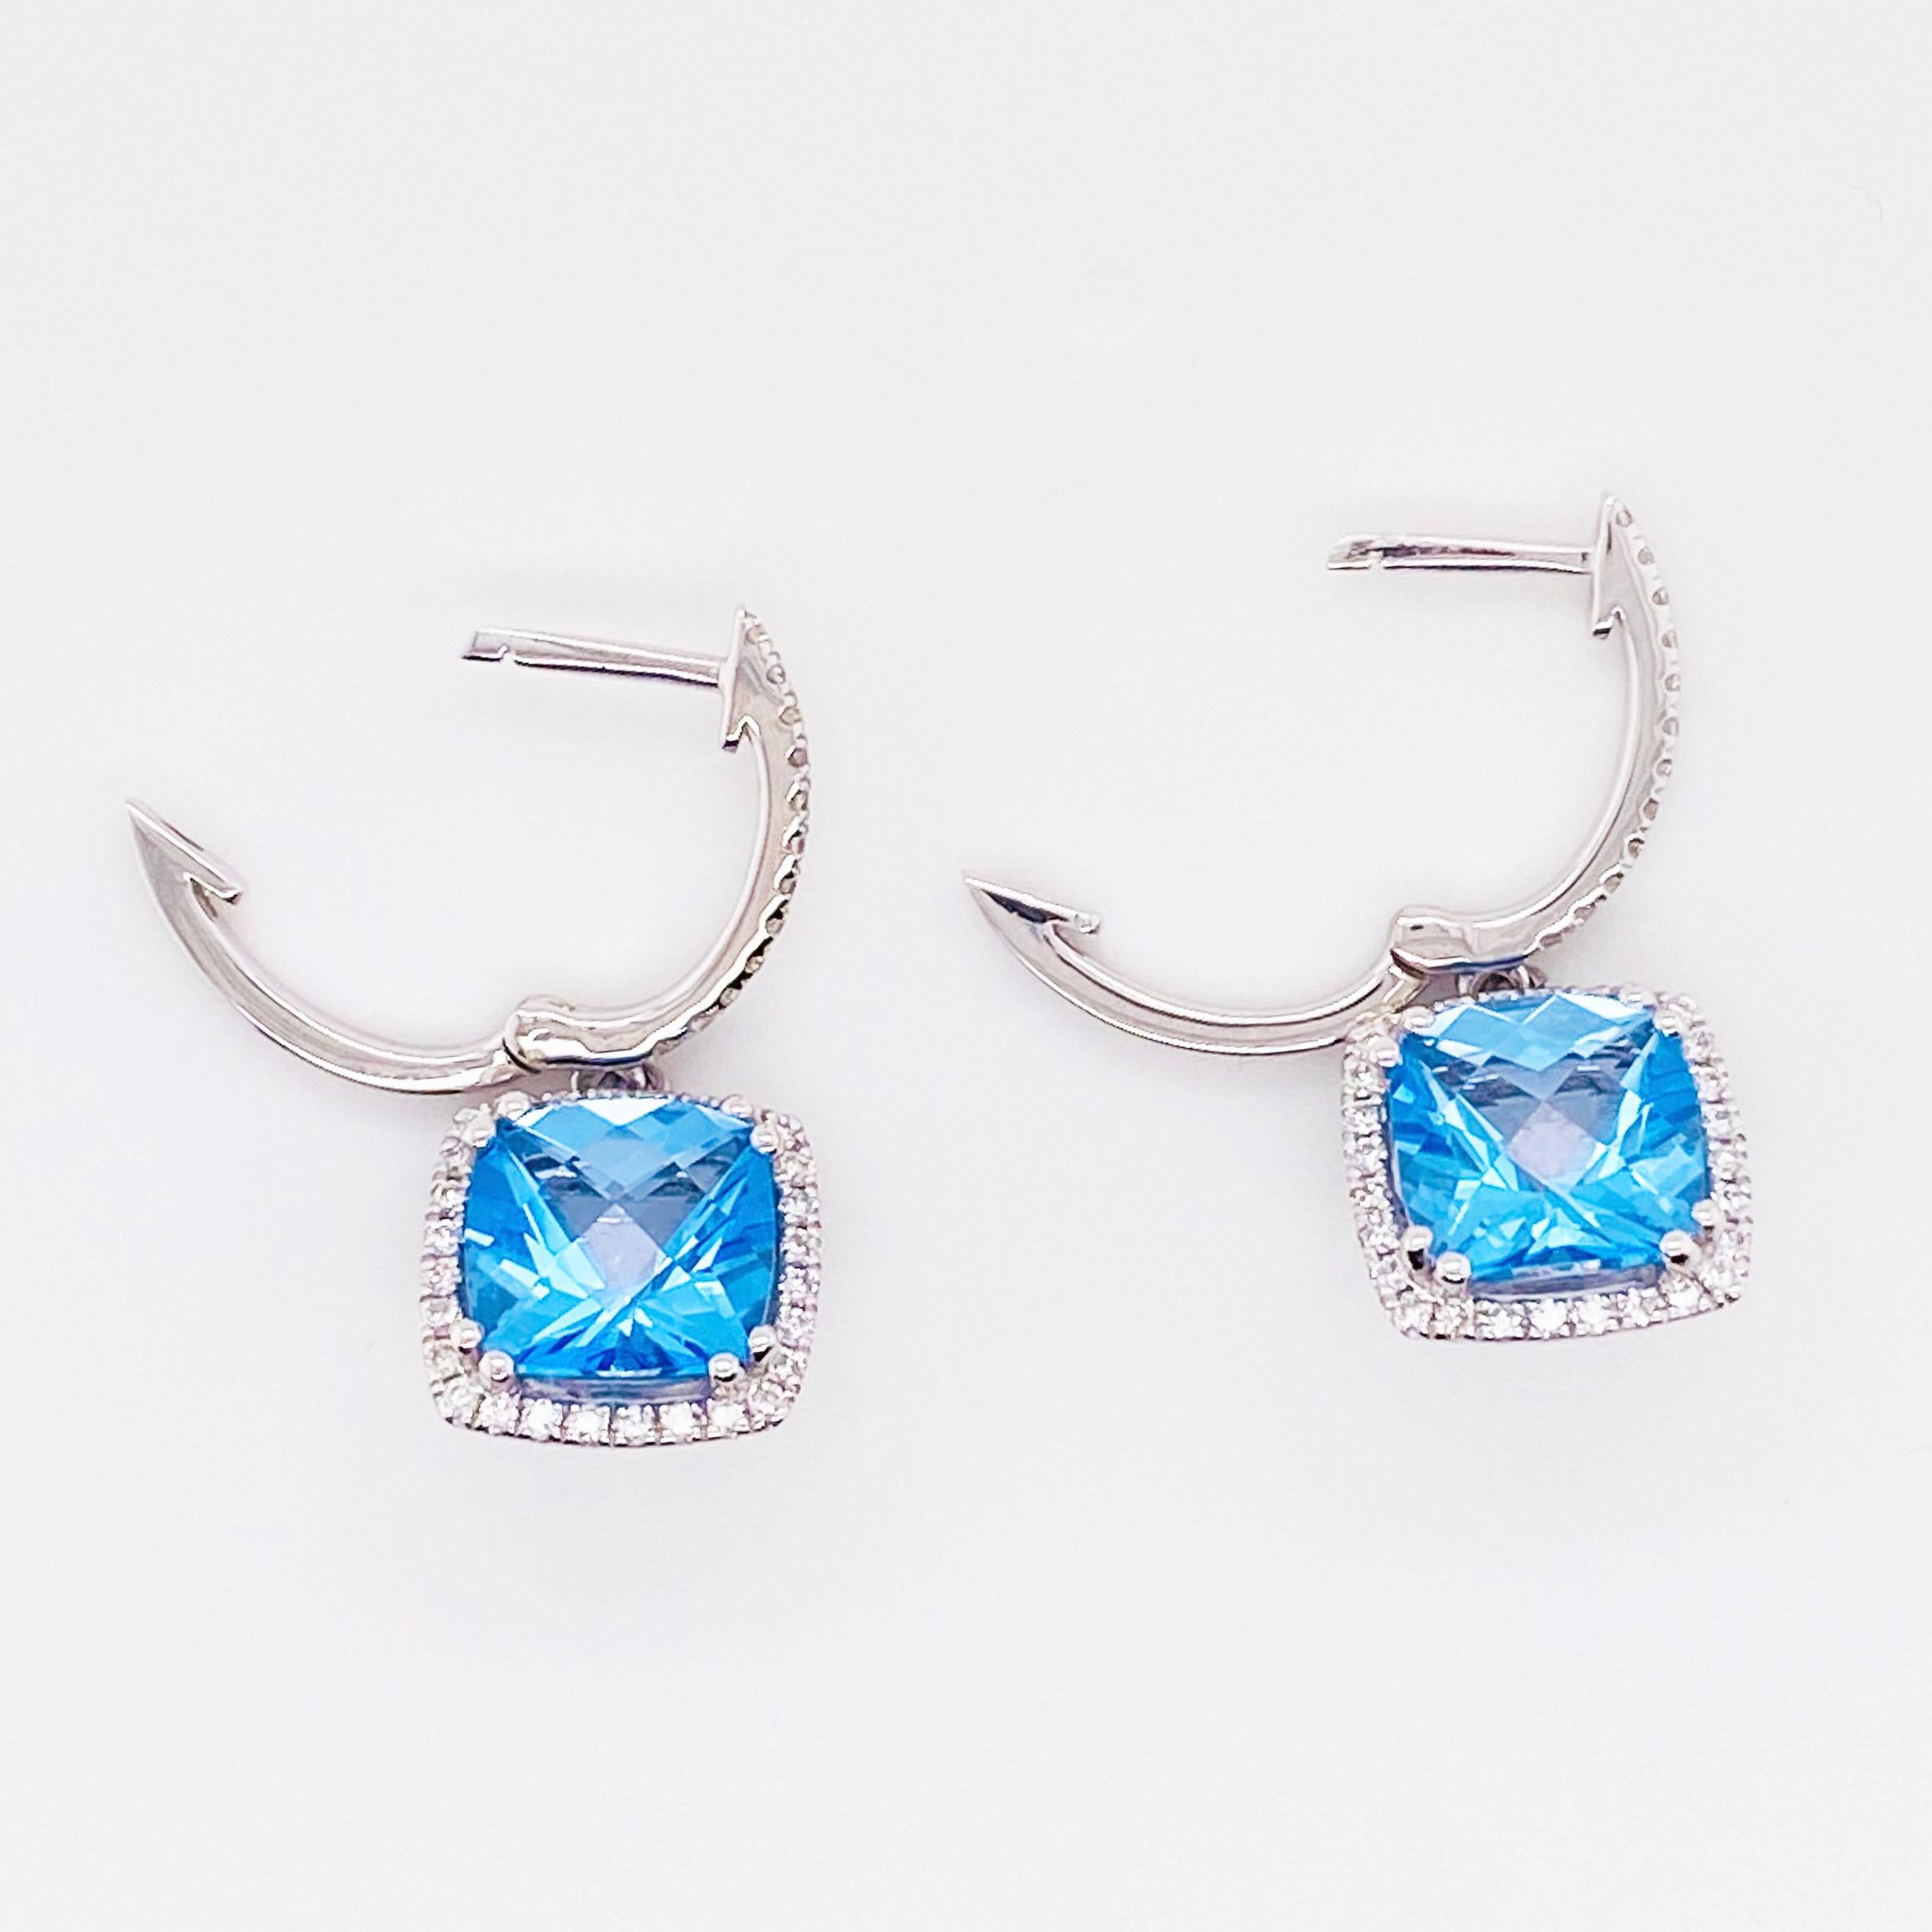 14 Karat White Gold 
Blue topaz and Diamond
0.44 carat diamond
5.19 carat blue topaz
40 total diamonds on each earring 